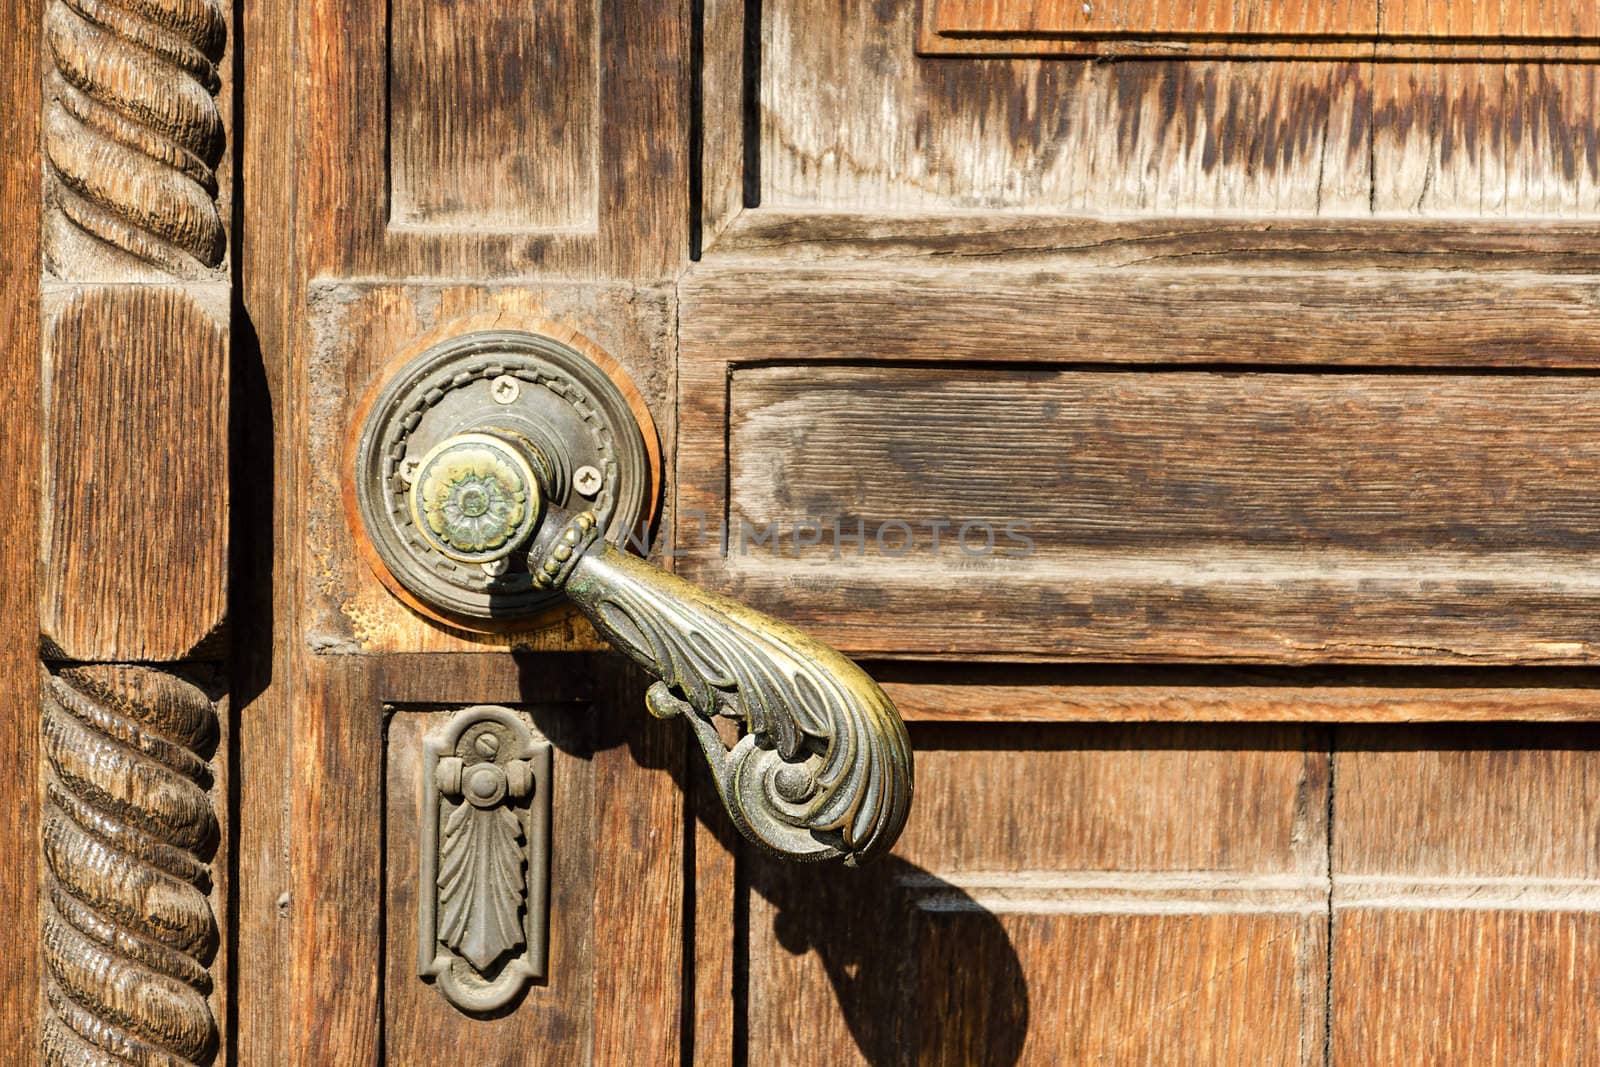 Vintage wooden door with a ornamental metal handle